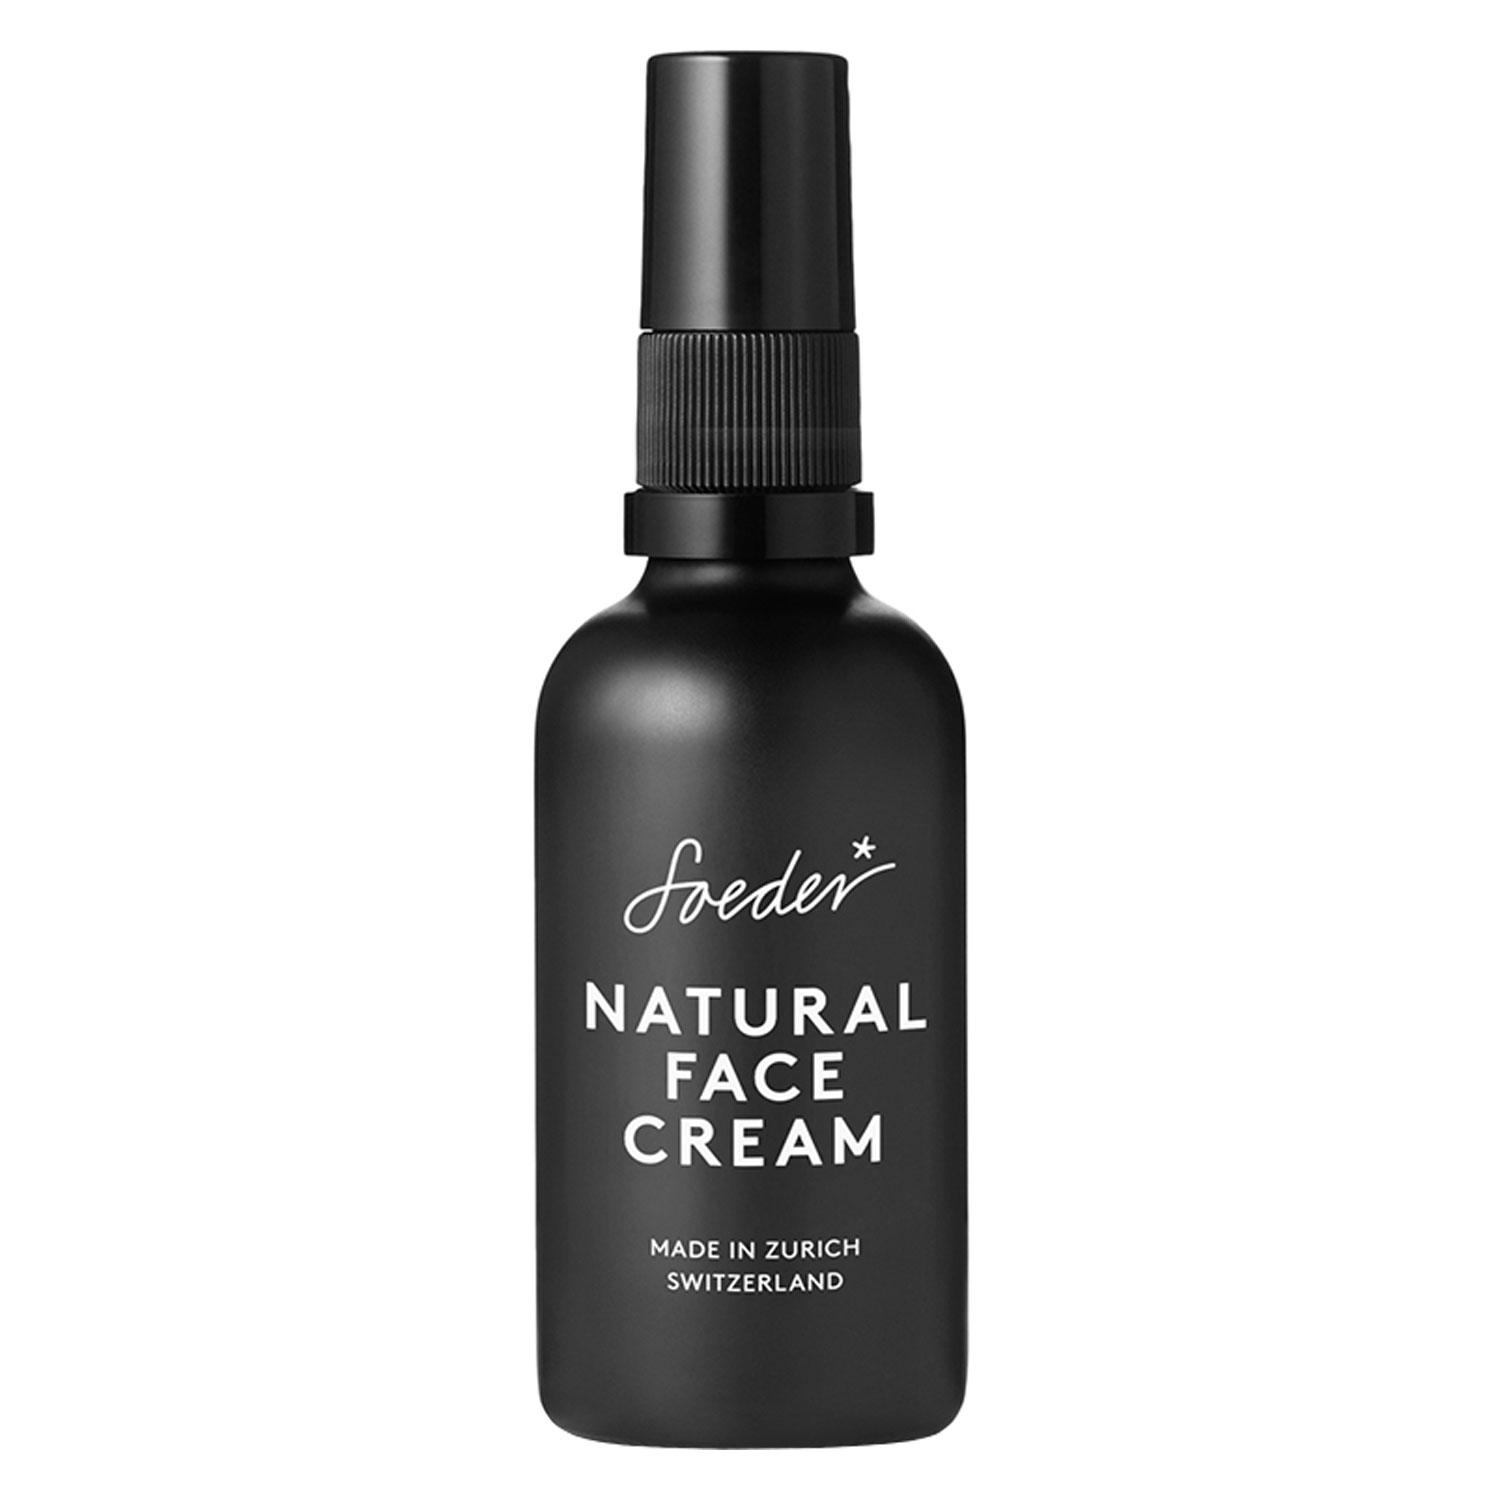 Soeder - Natural Face Cream